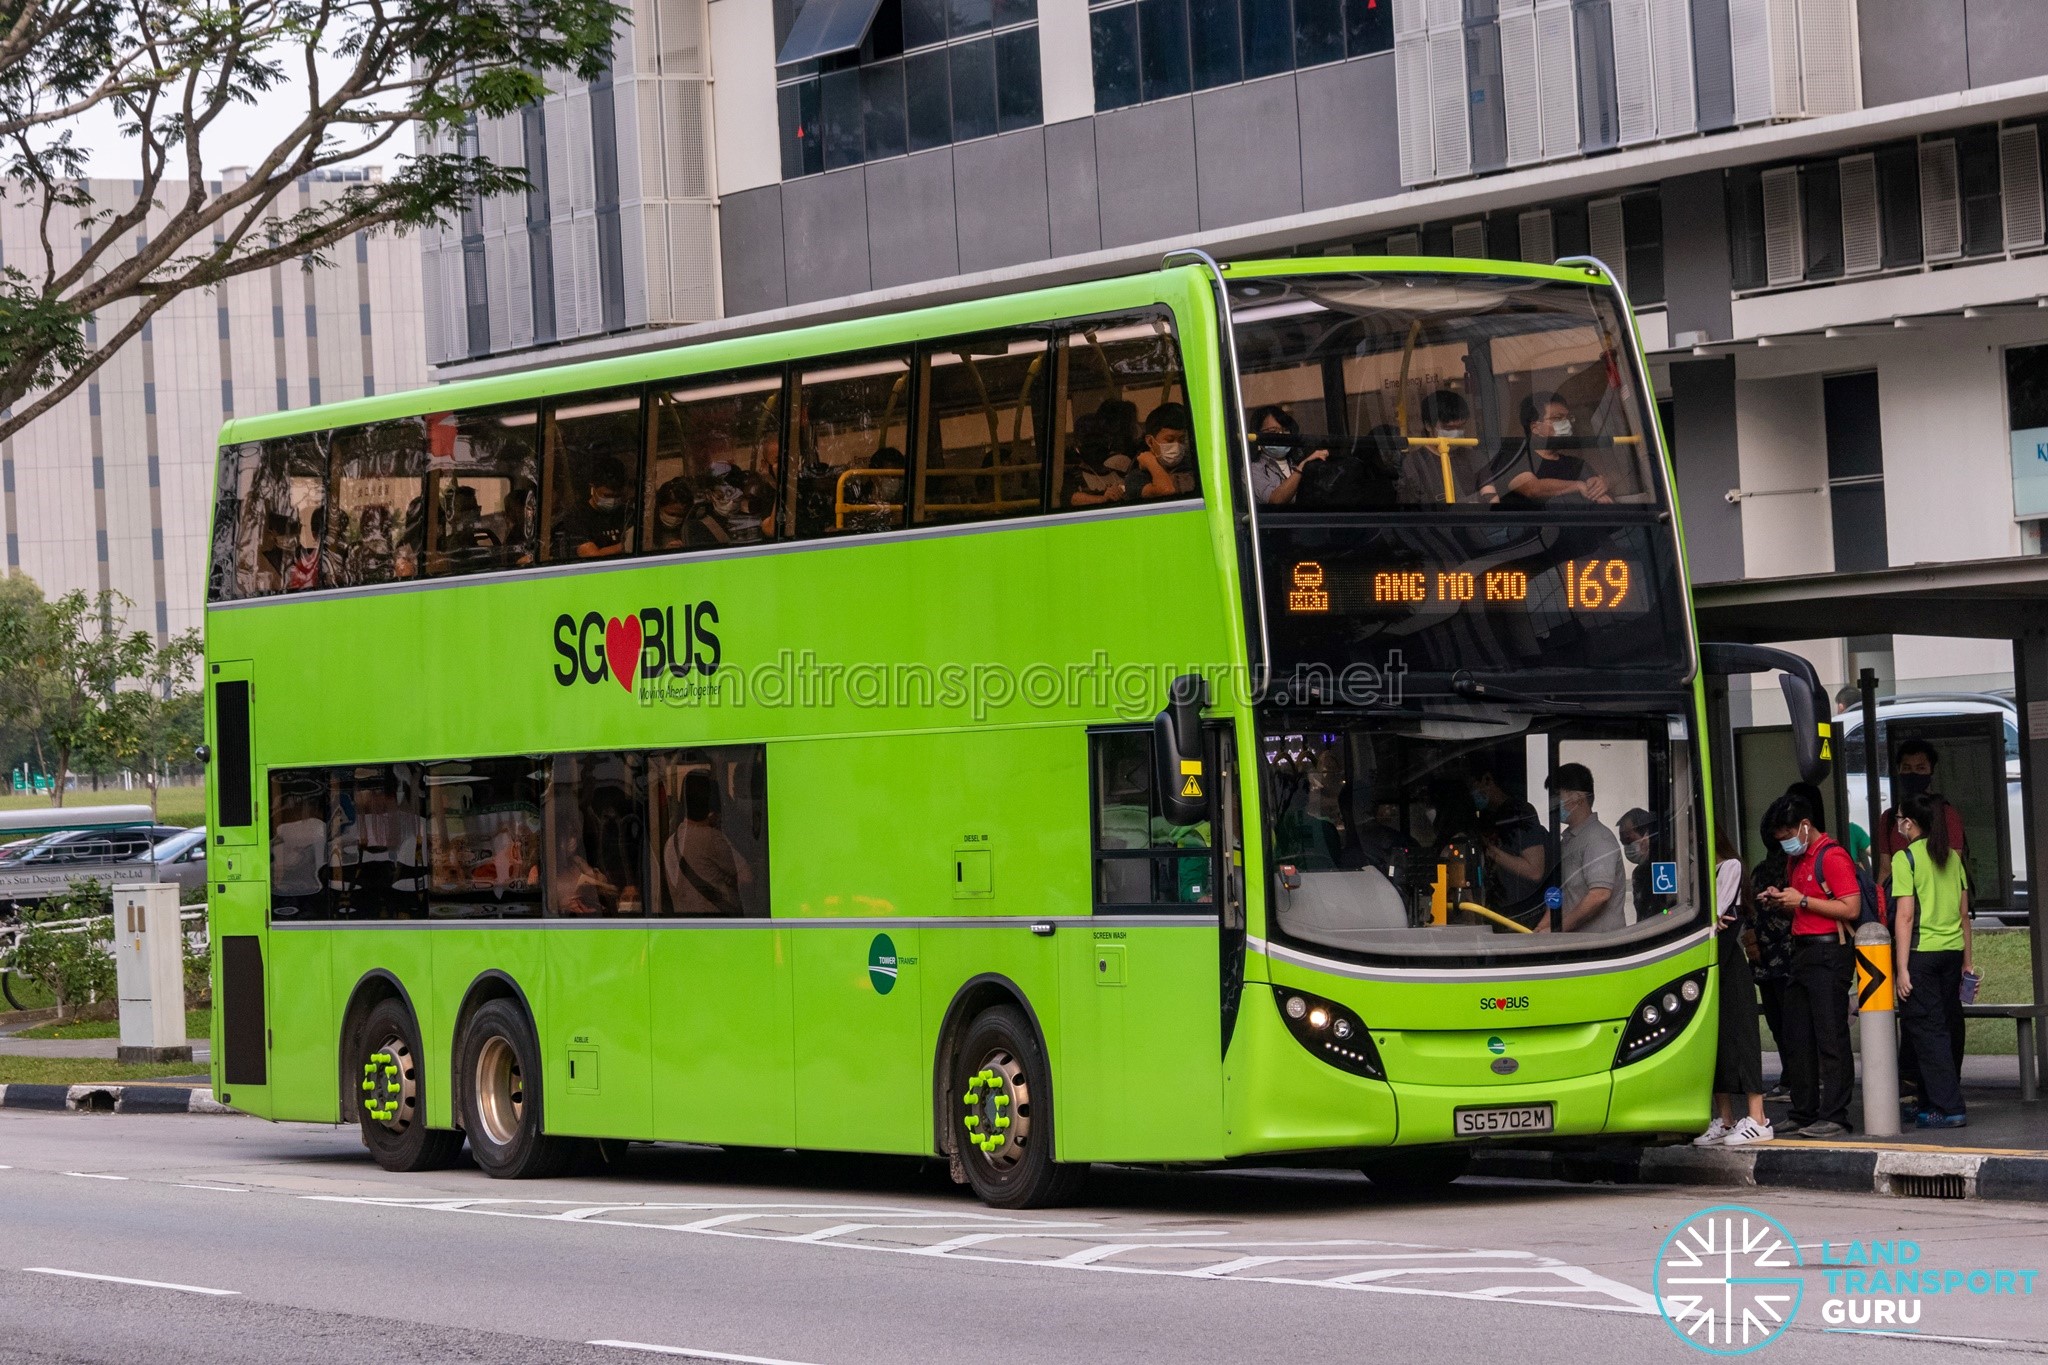 Tower Transit Bus Service 169